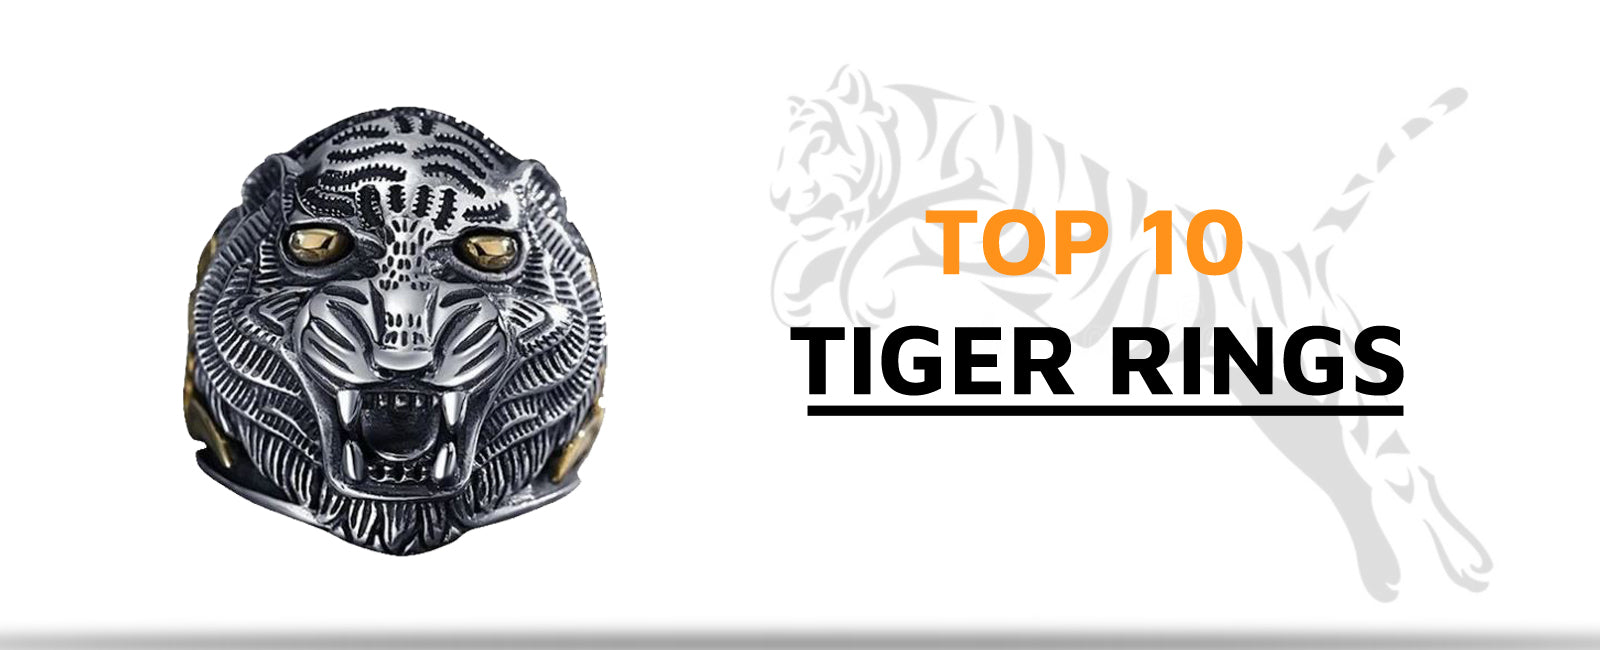 Top 10 Tiger Rings